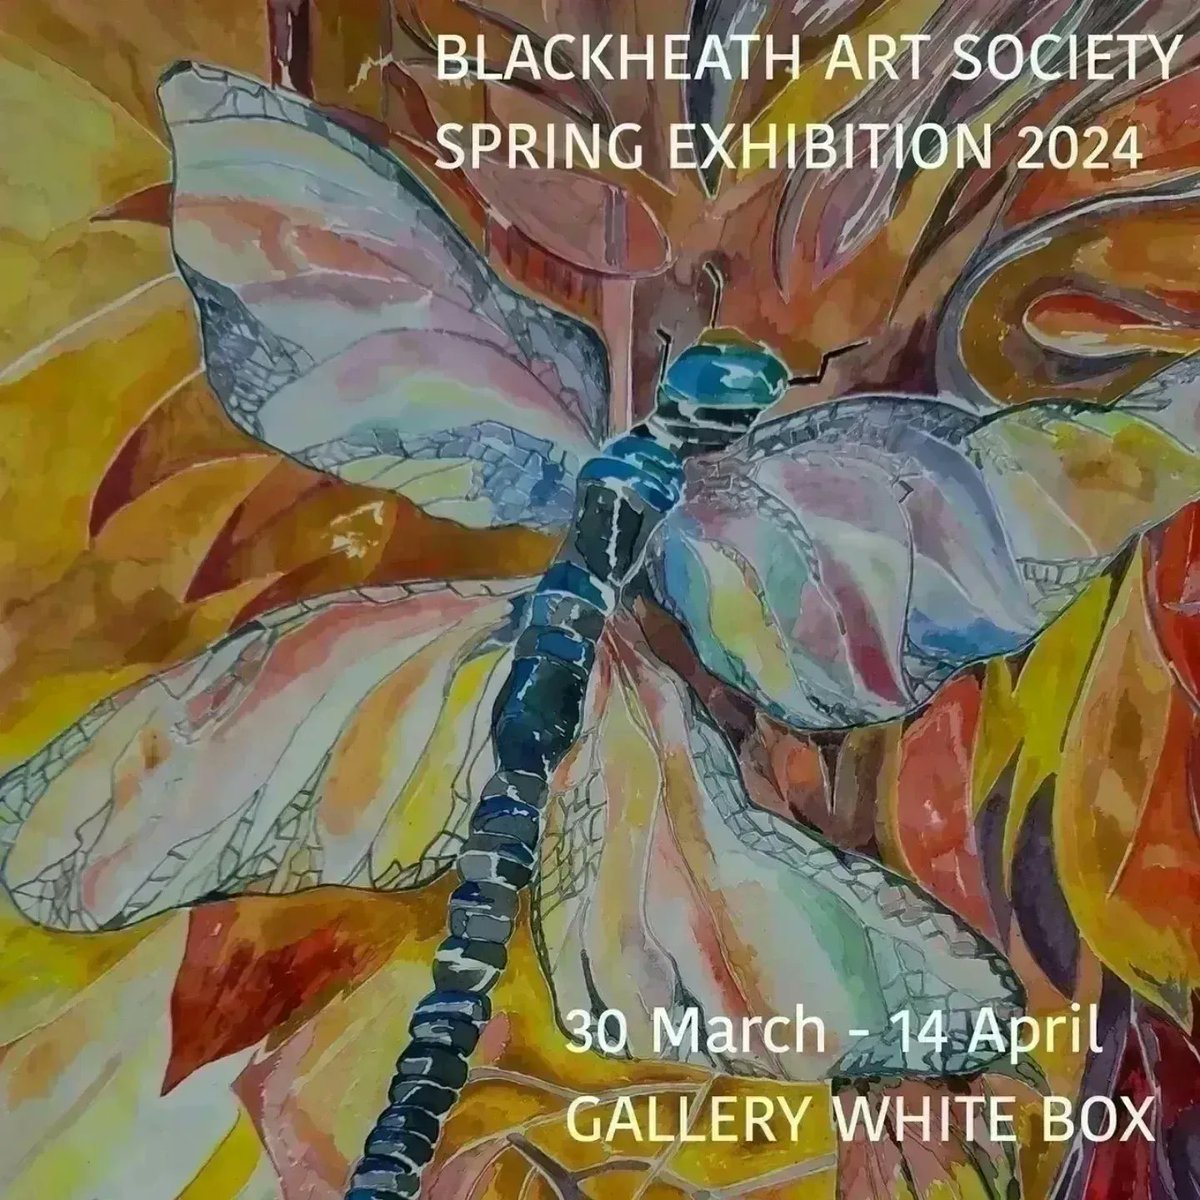 'Bluebells at Lenses Abbey' (cropped) by Joanna Weller, part of the Blackheath Art Society Spring Exhibition at White Box Gallery, Blackheath. Last weekend 13/14th April!
#artexhibition #artinlondon #artevents #artsale #artcollector #artgallery #londonartist #whiteboxgallery